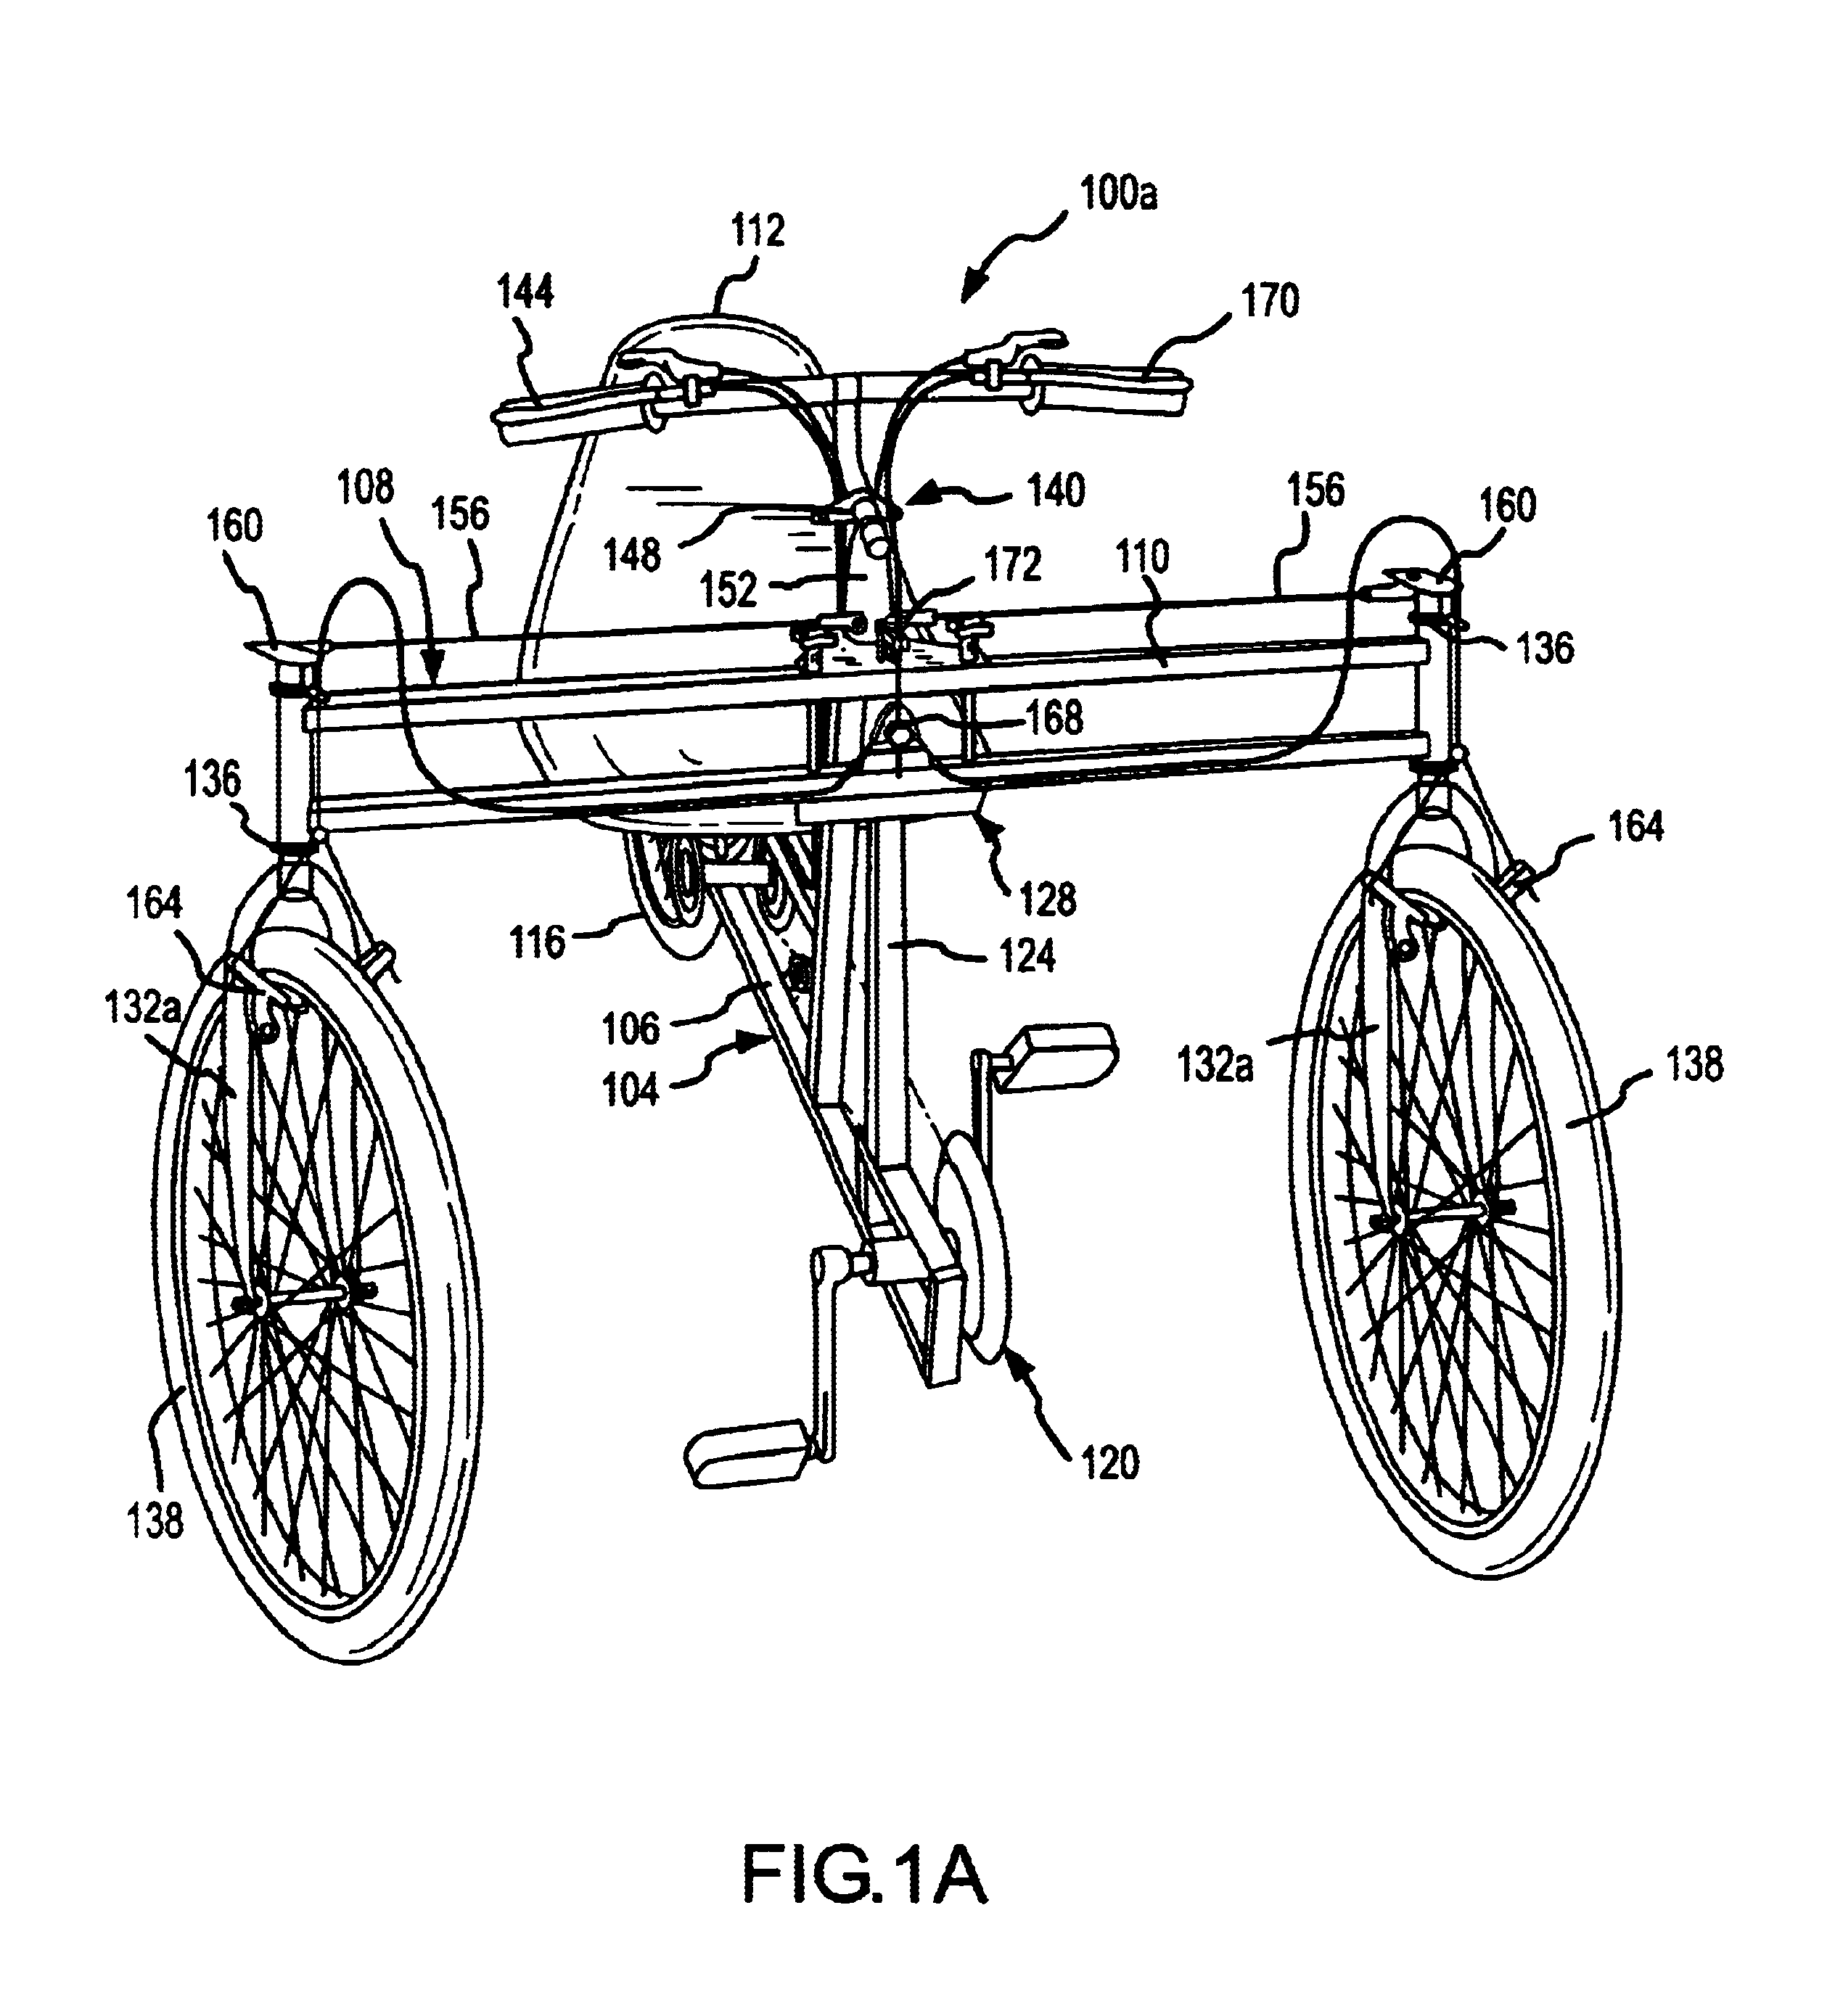 Human powered vehicle